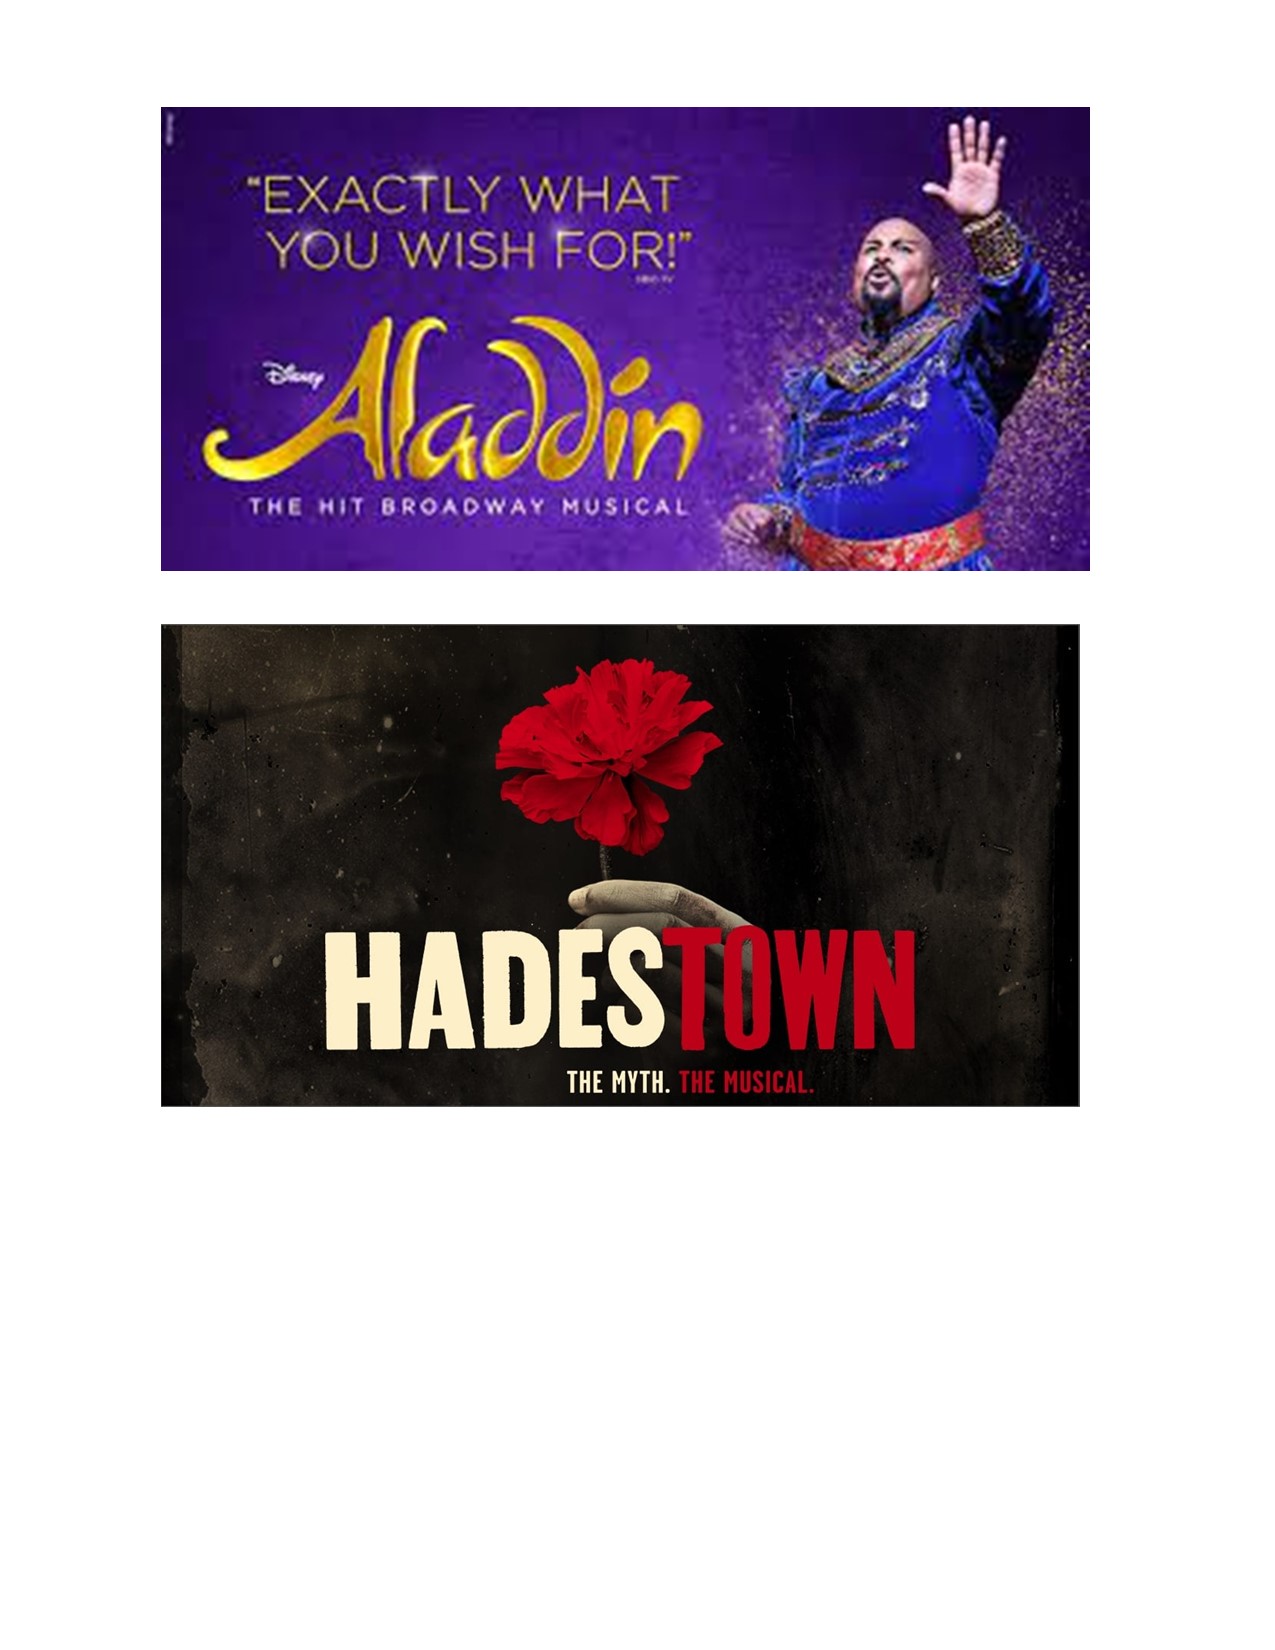 Broadway Shows: Aladdin or Hadestown